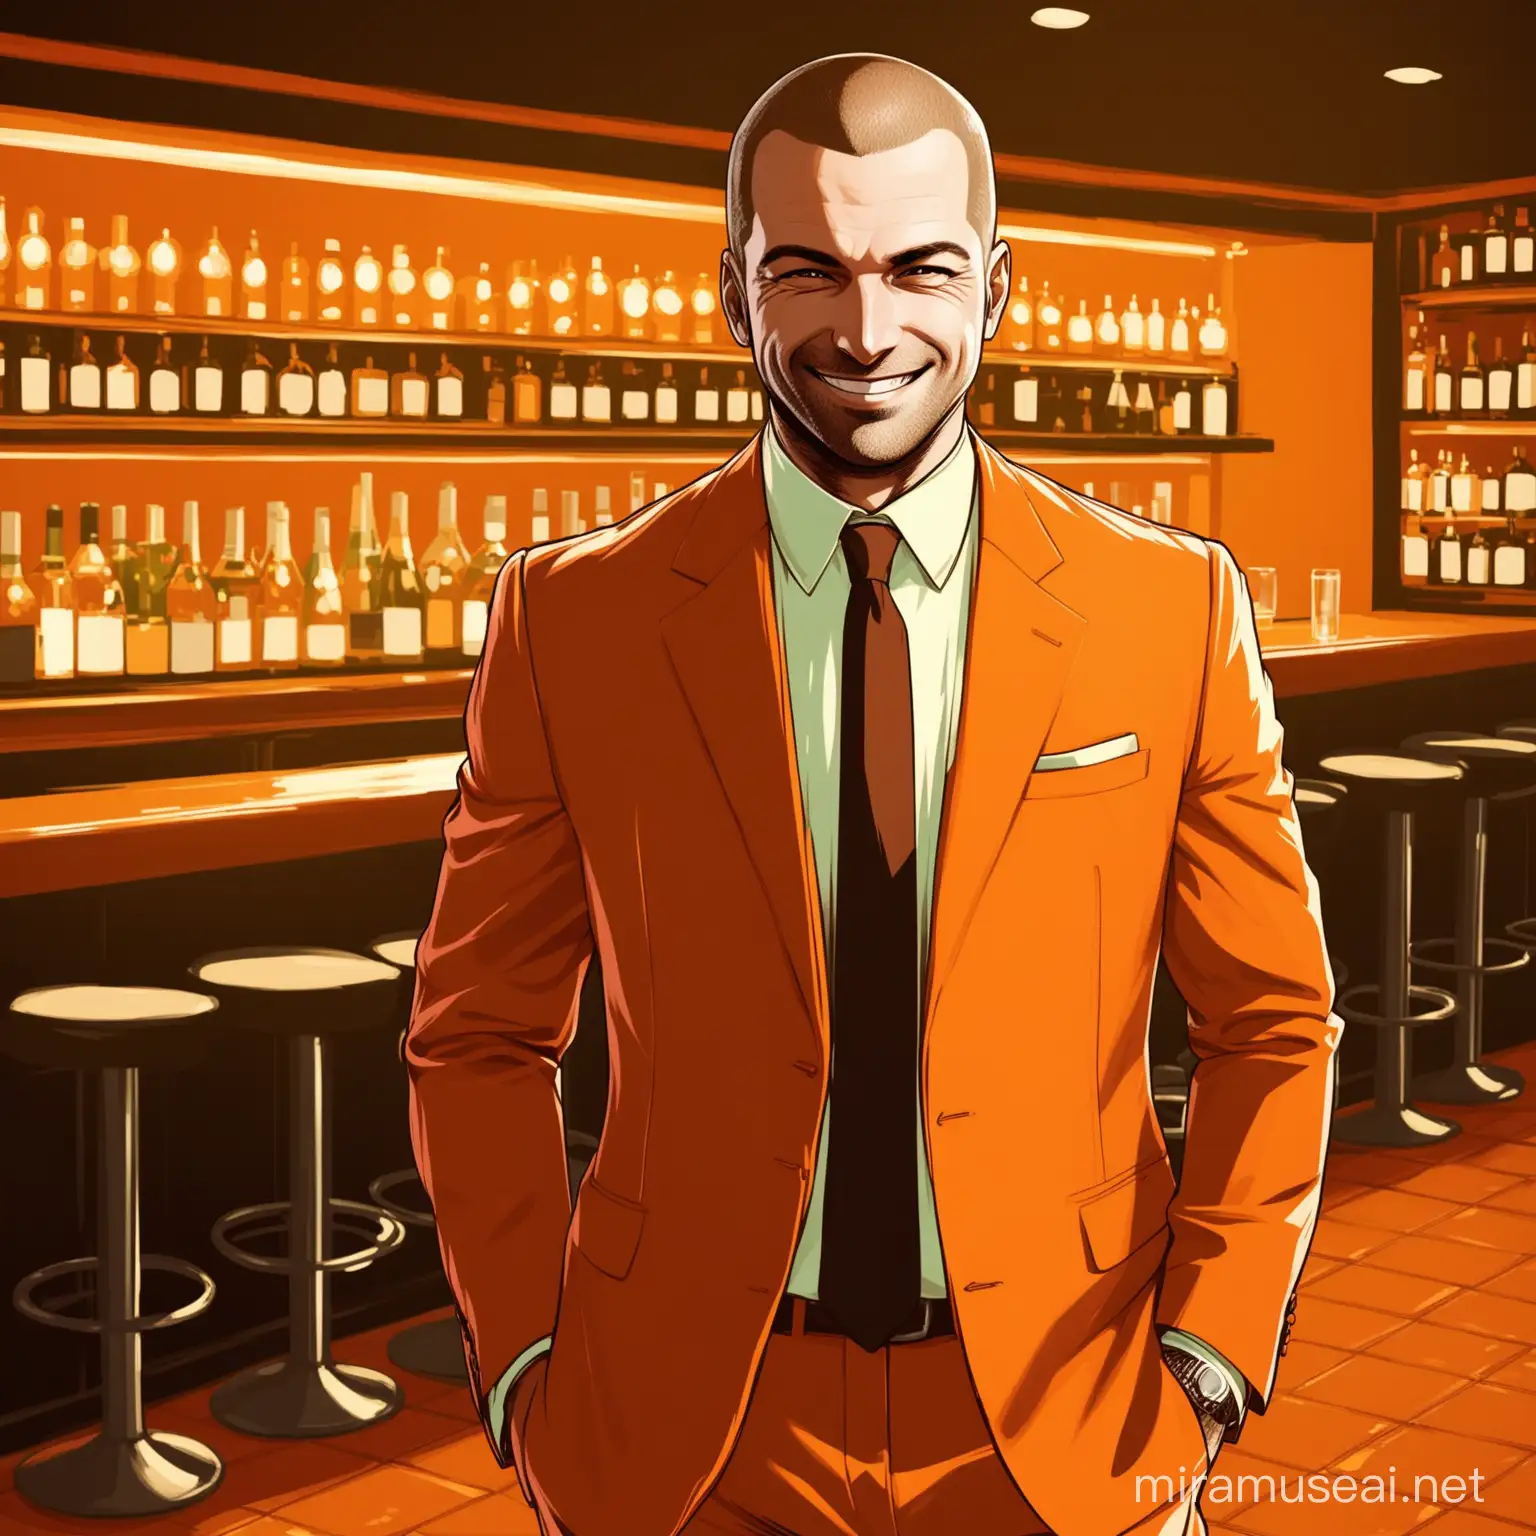 Stylish Businessman in an Urban Lounge with Vibrant Orange Tones